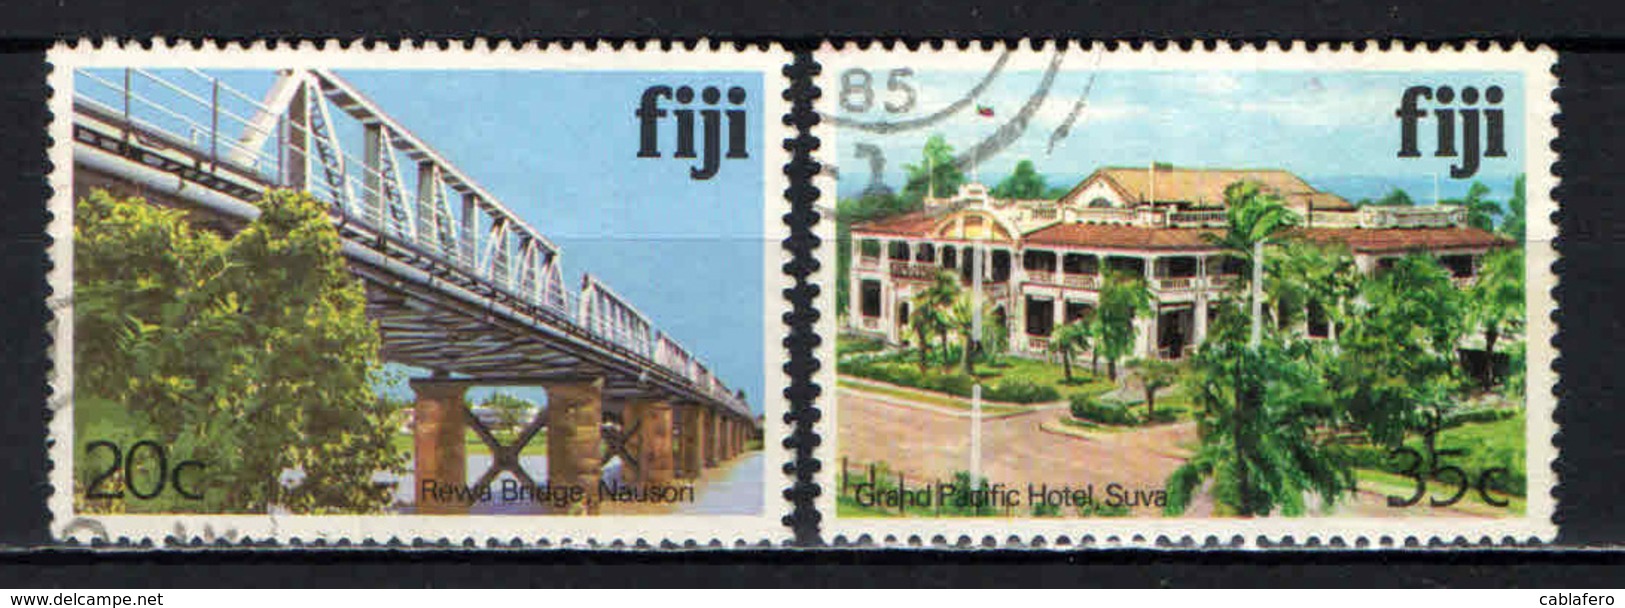 FIJI - 1979 - Rewa Bridge, Grand Pacific Hotel, Suva - USATI - Fiji (1970-...)